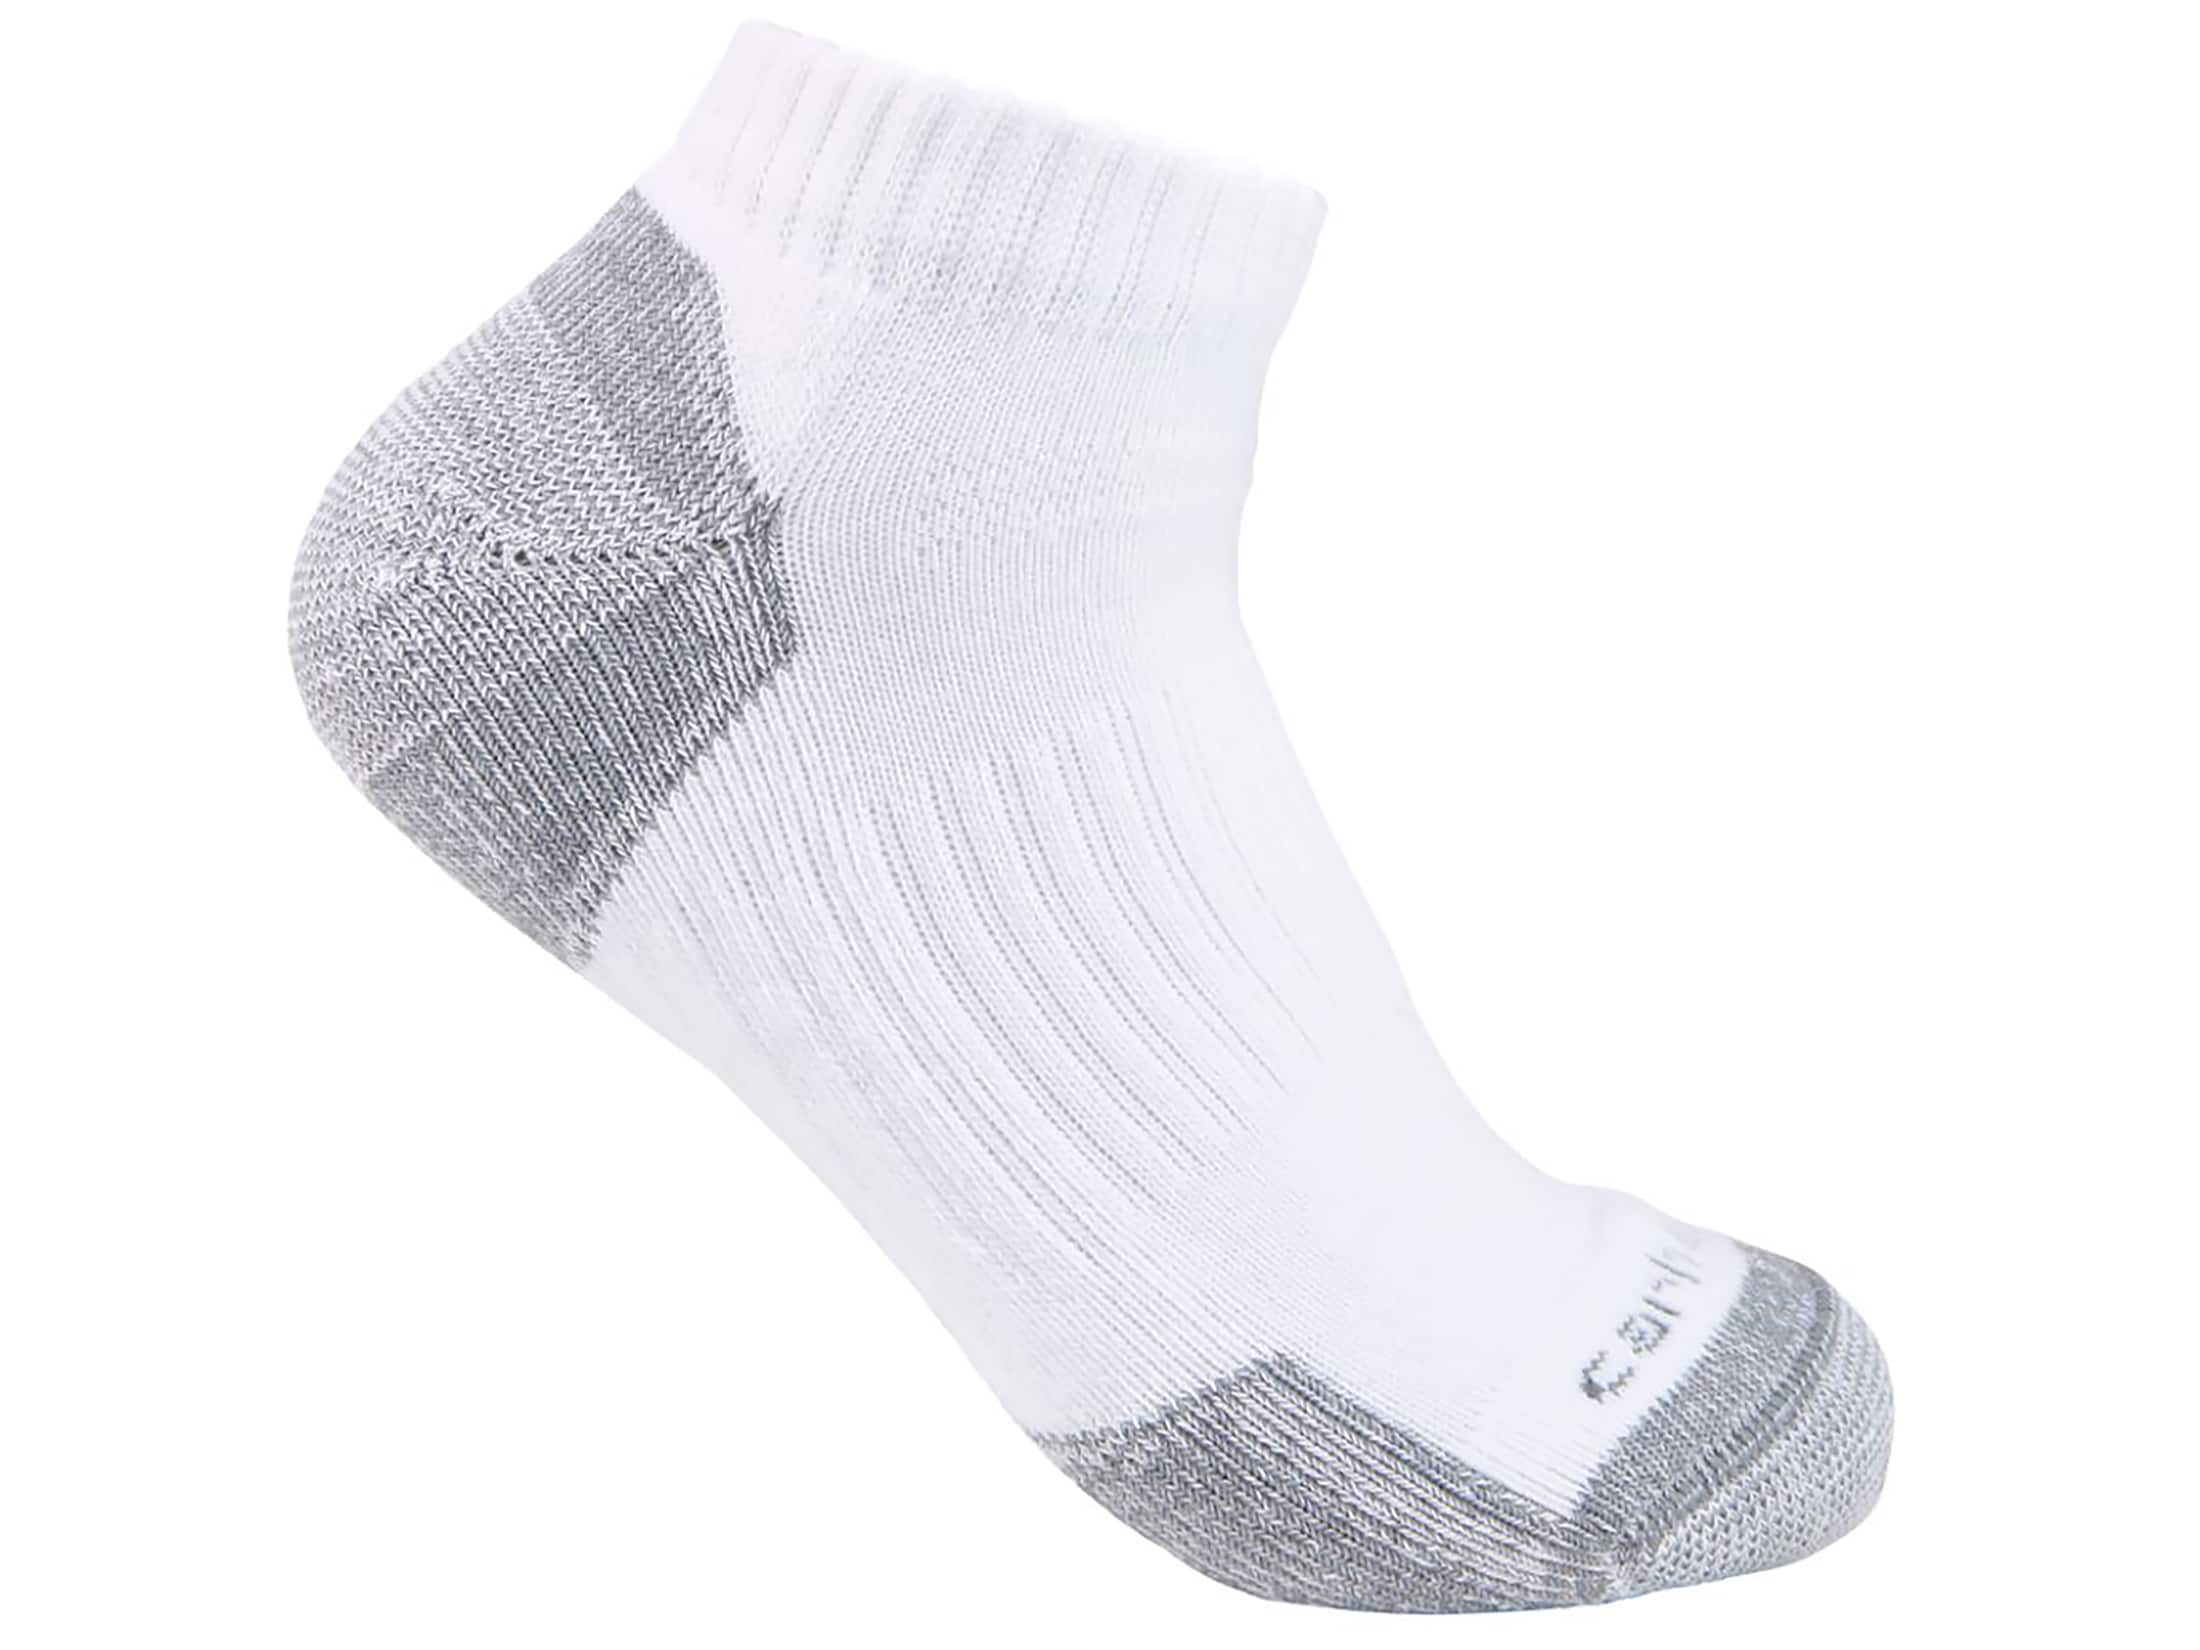 Carhartt Men's Lightweight Low Cut Socks White Large 3 Pack